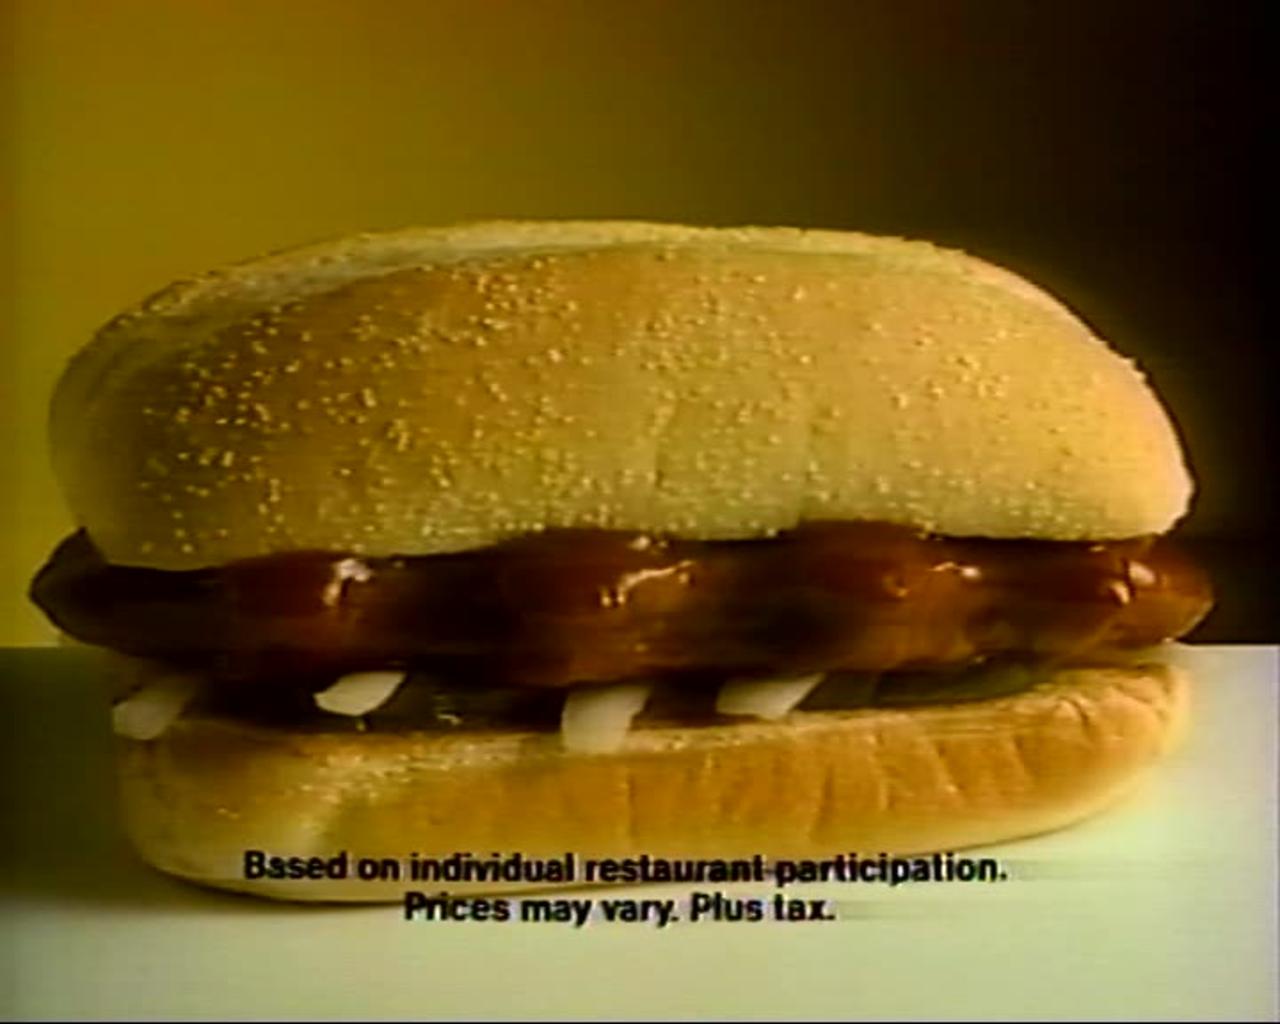 July 11, 1989 - The Return of the McRib Sandwich